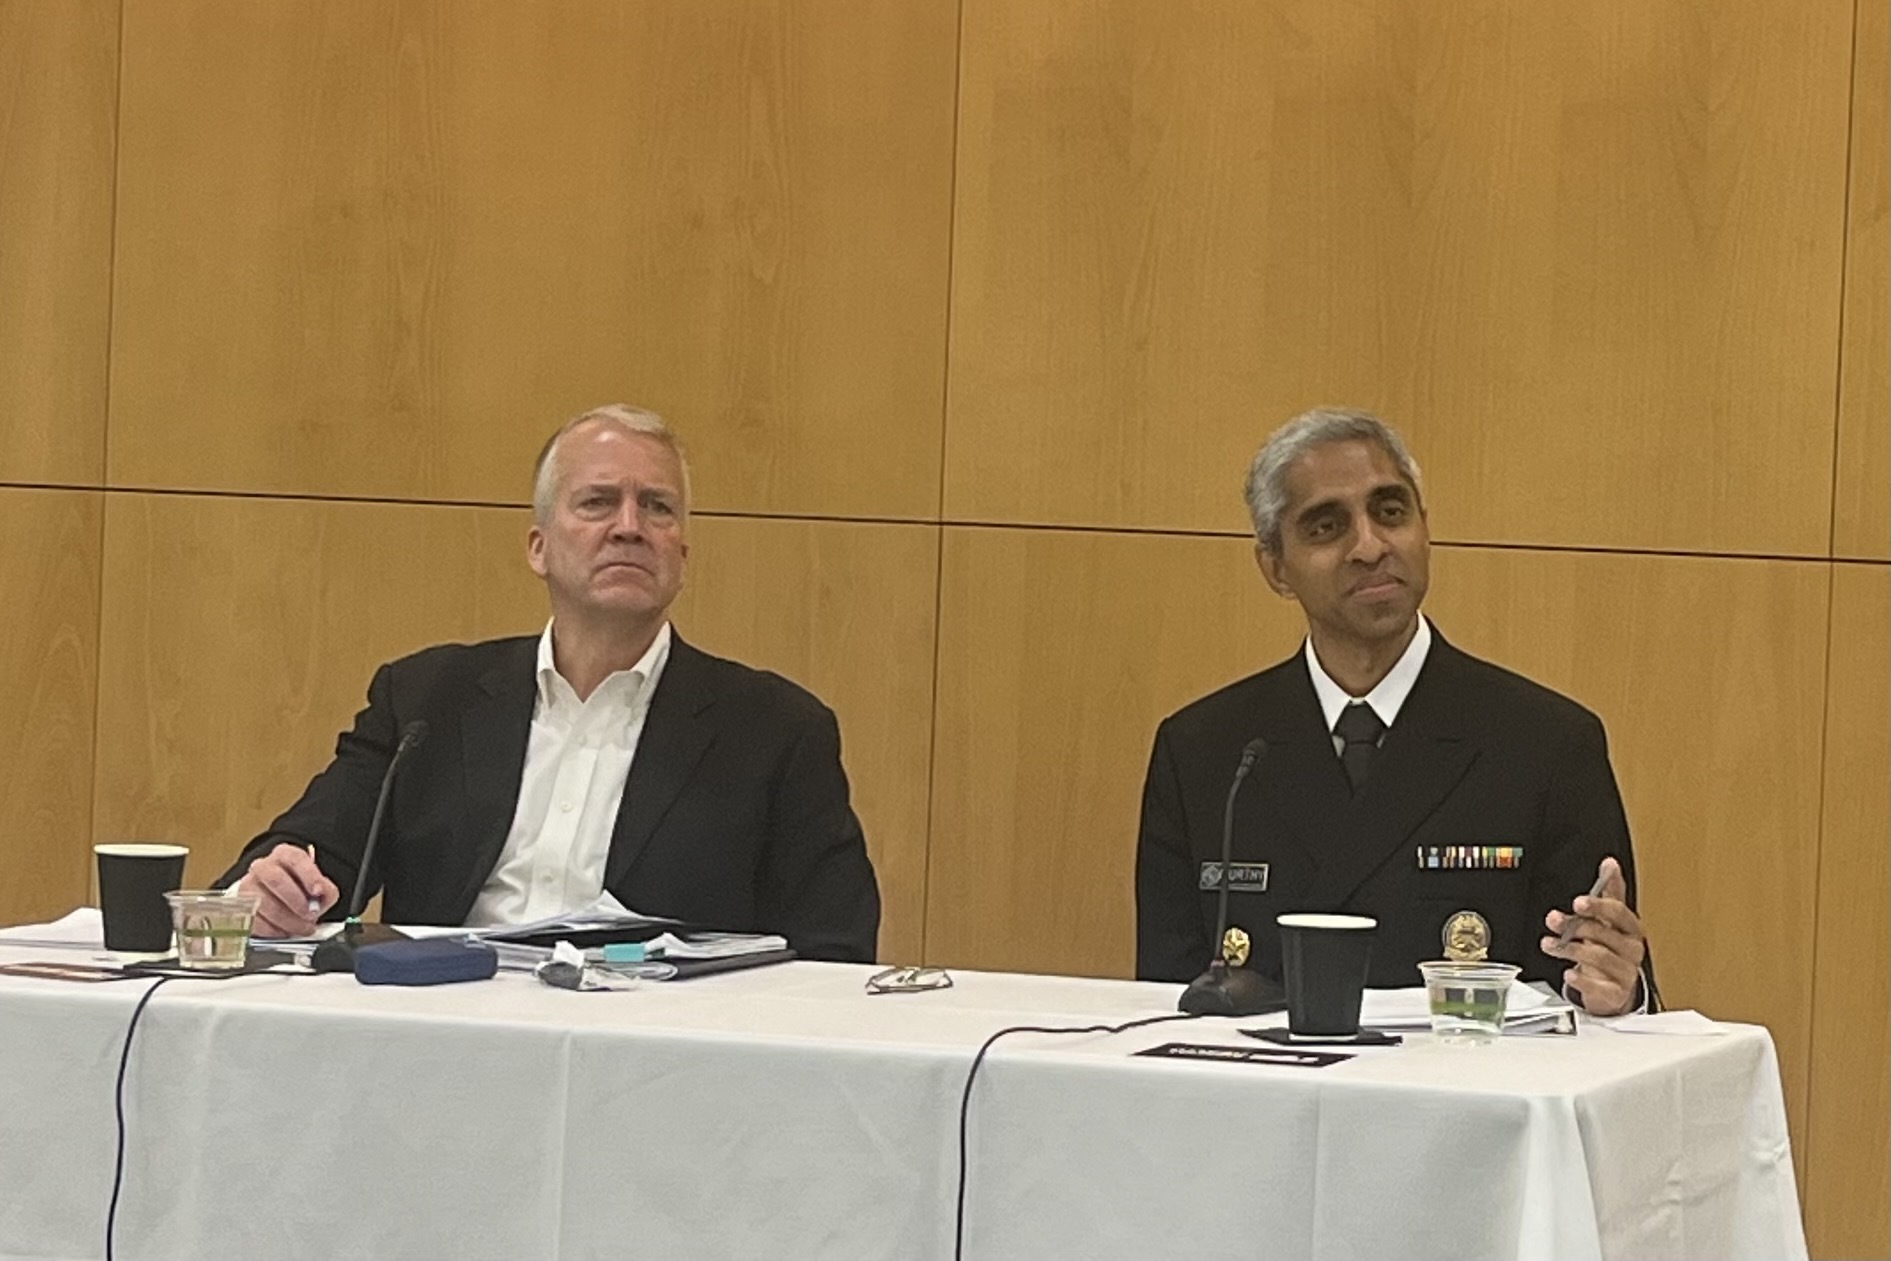 Sen. Dan Sullivan and U.S. Surgen General Vivek Murthy sit at a table.